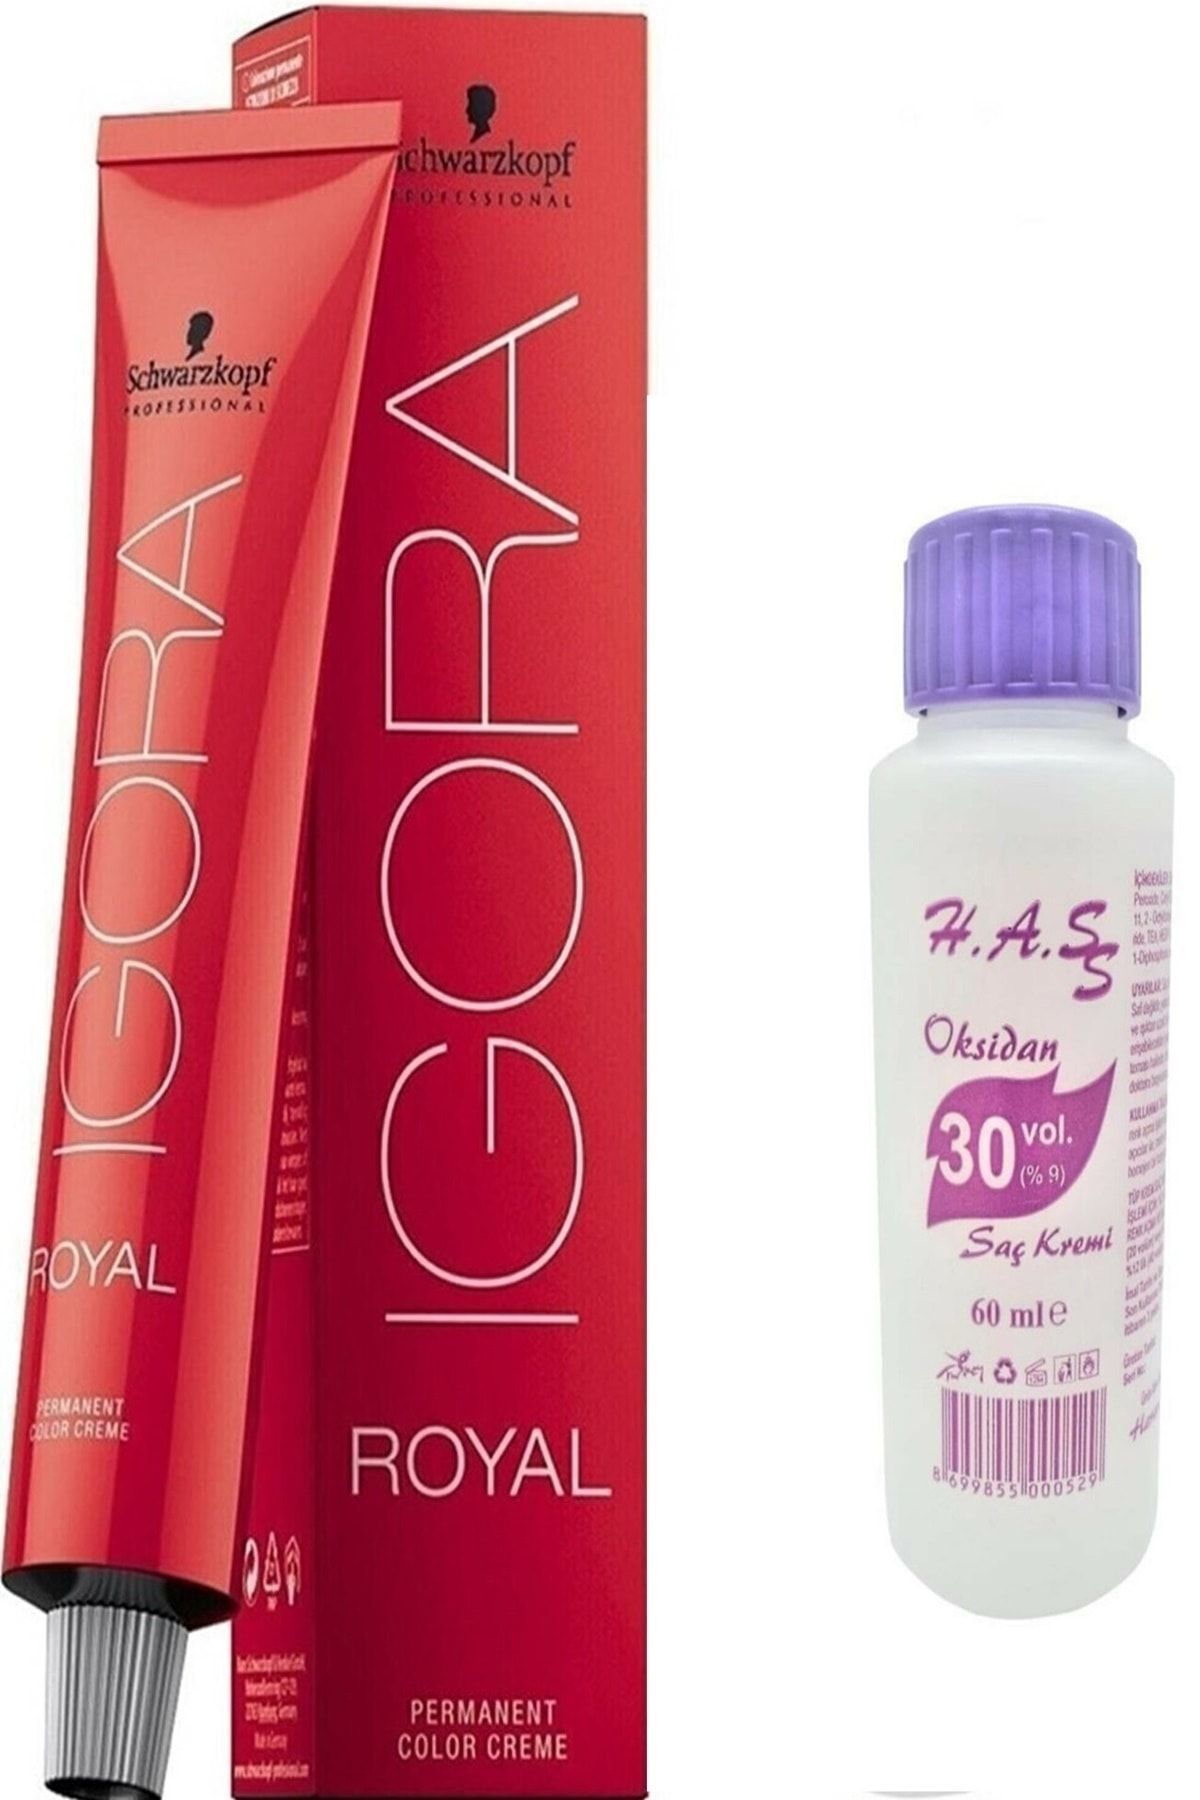 Igora Igora Royal Saç Boyası 9-0 Sarı 60 Ml + Mini Oksidan 30 Volüm